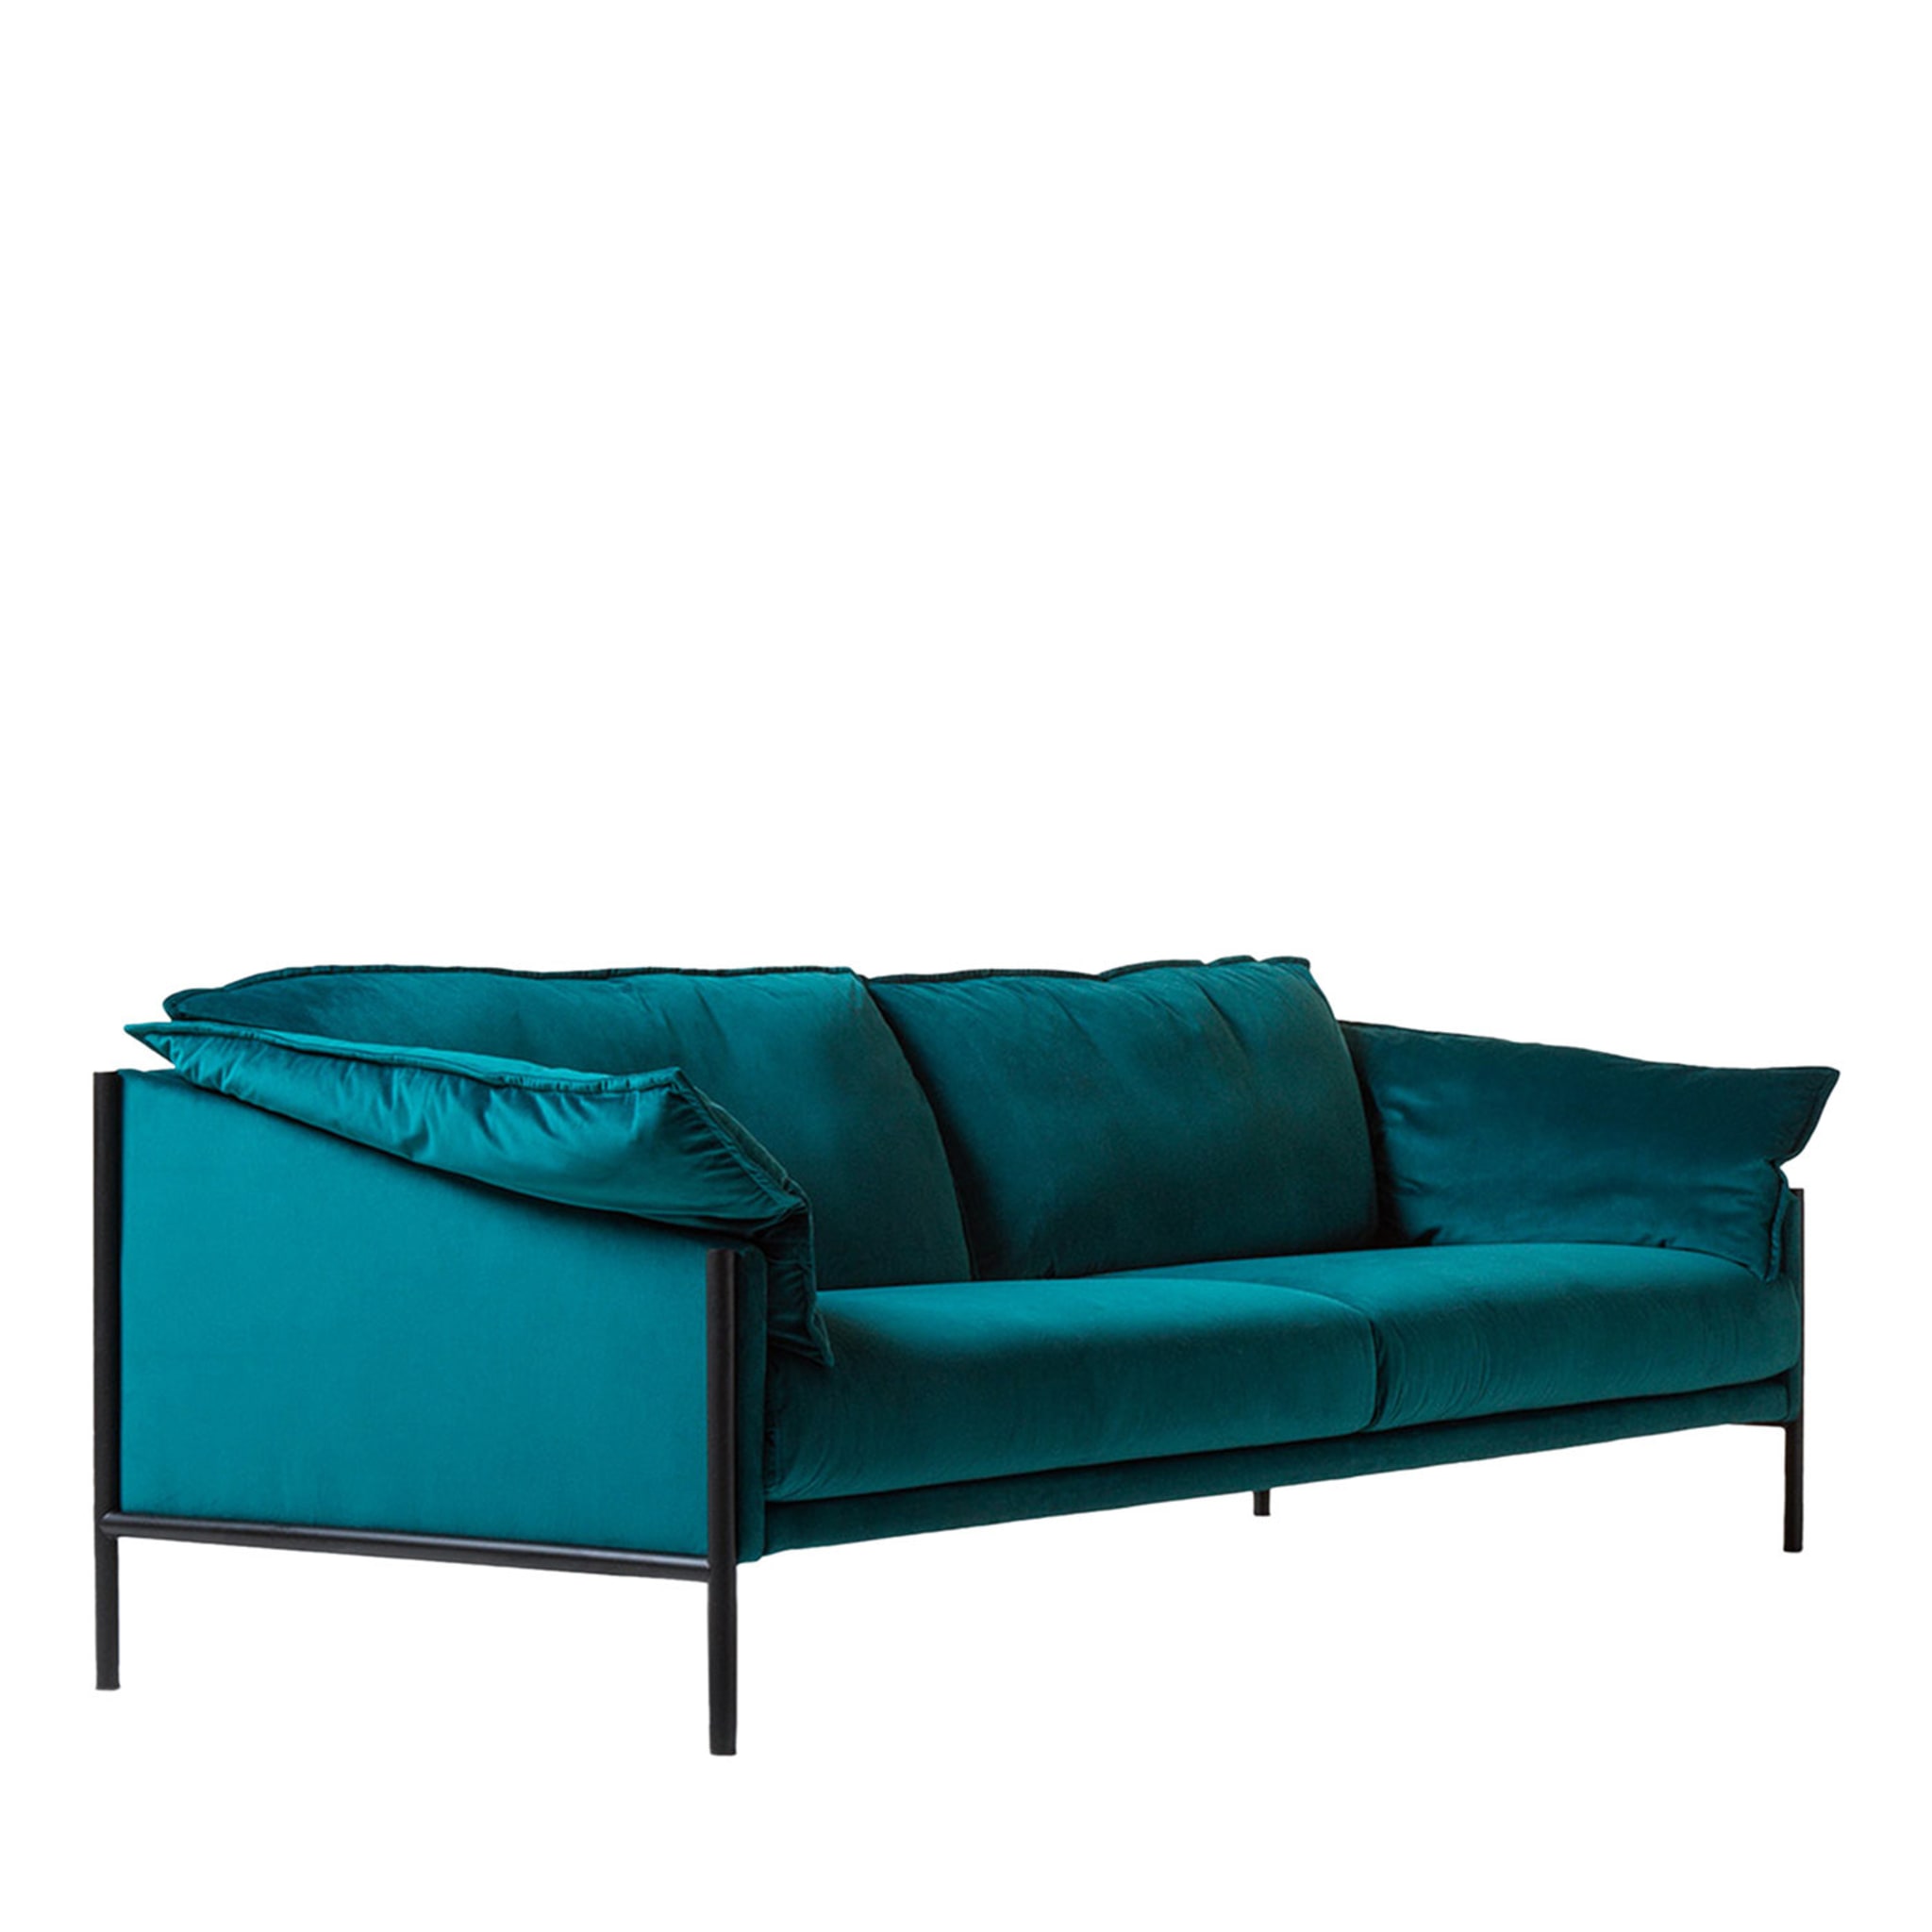 Weekend Petrol-Blue Sofa by Angeletti Ruzza - Main view